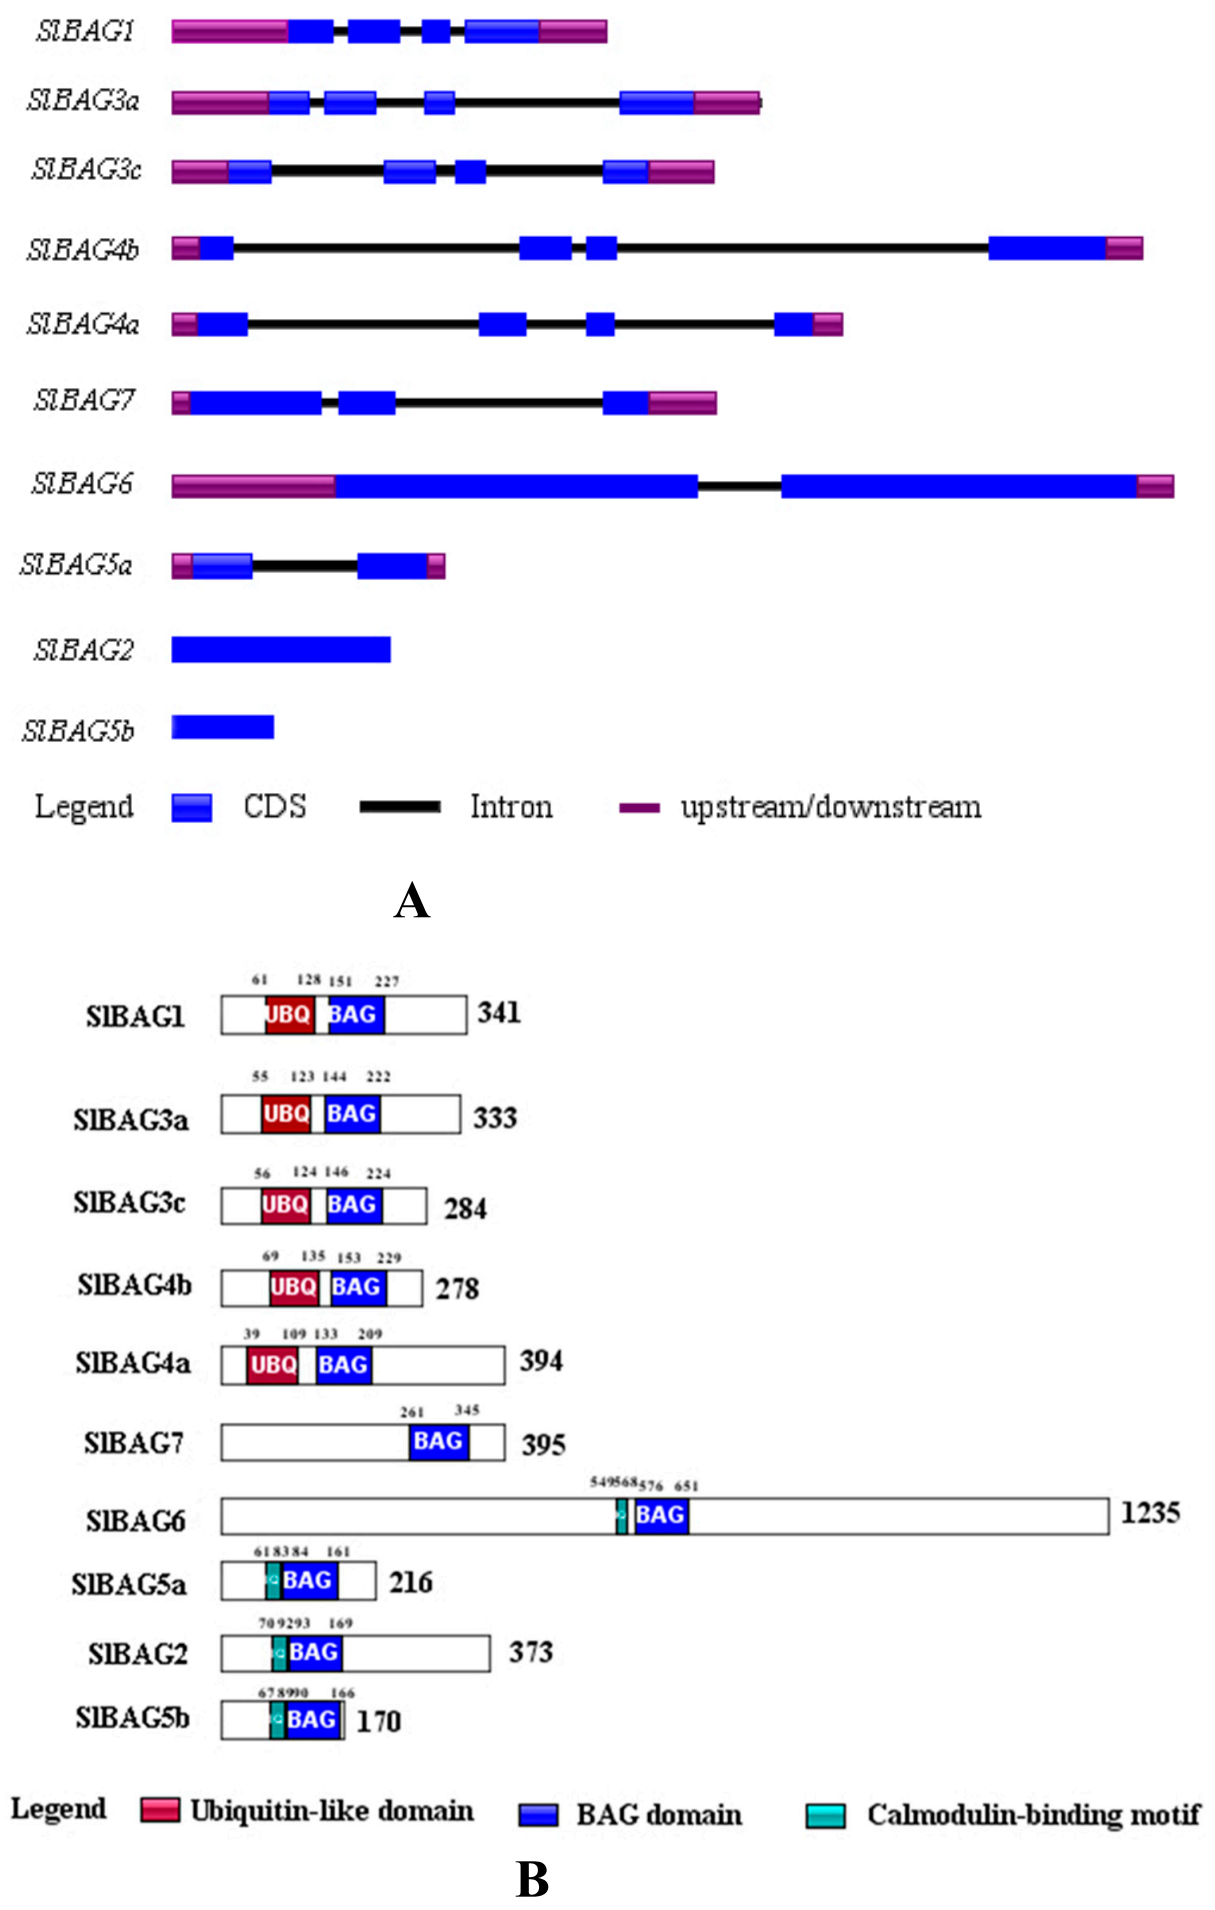 BAG4/SODD Protein Contains a Short BAG Domain - ScienceDirect